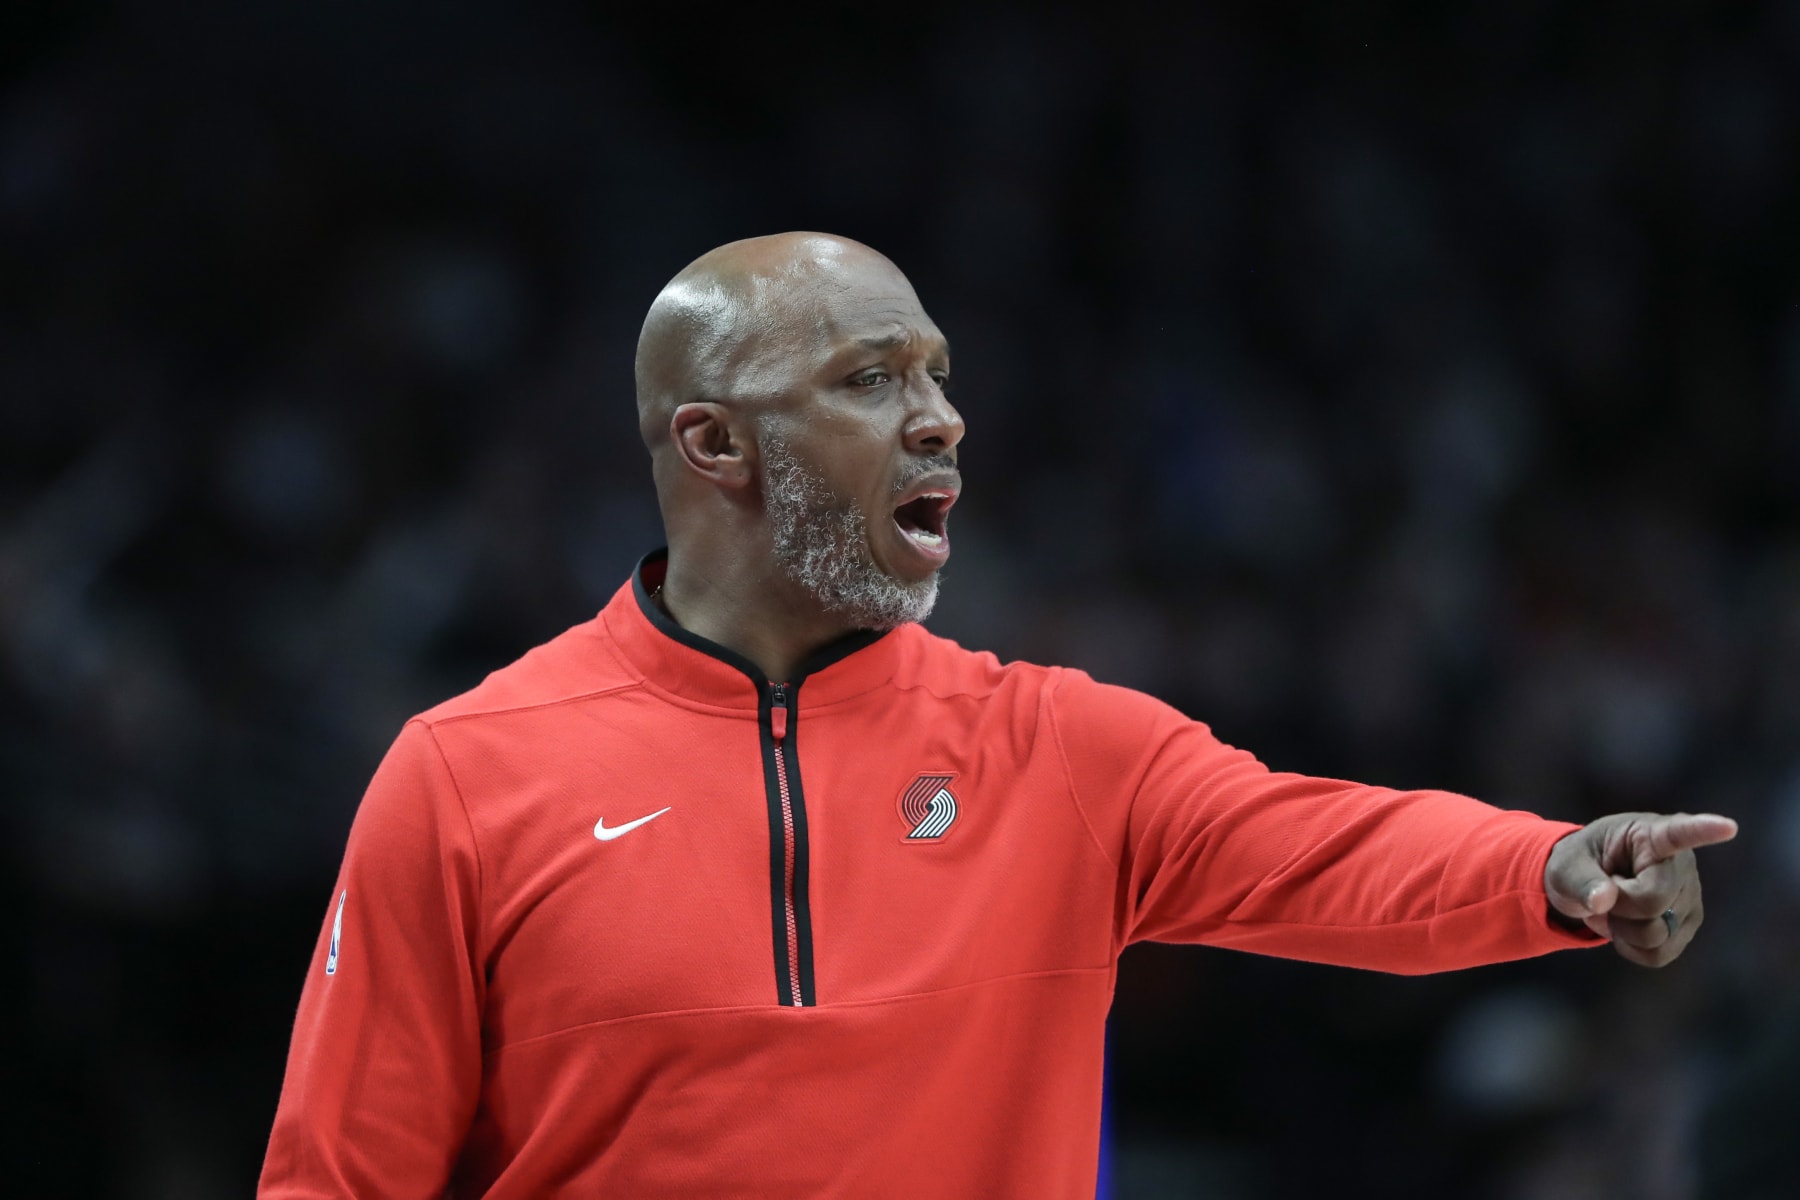 Chauncey Billups on the Horizon: NBA Teams Eye Trail Blazers Coach Amid Staff Shakeup